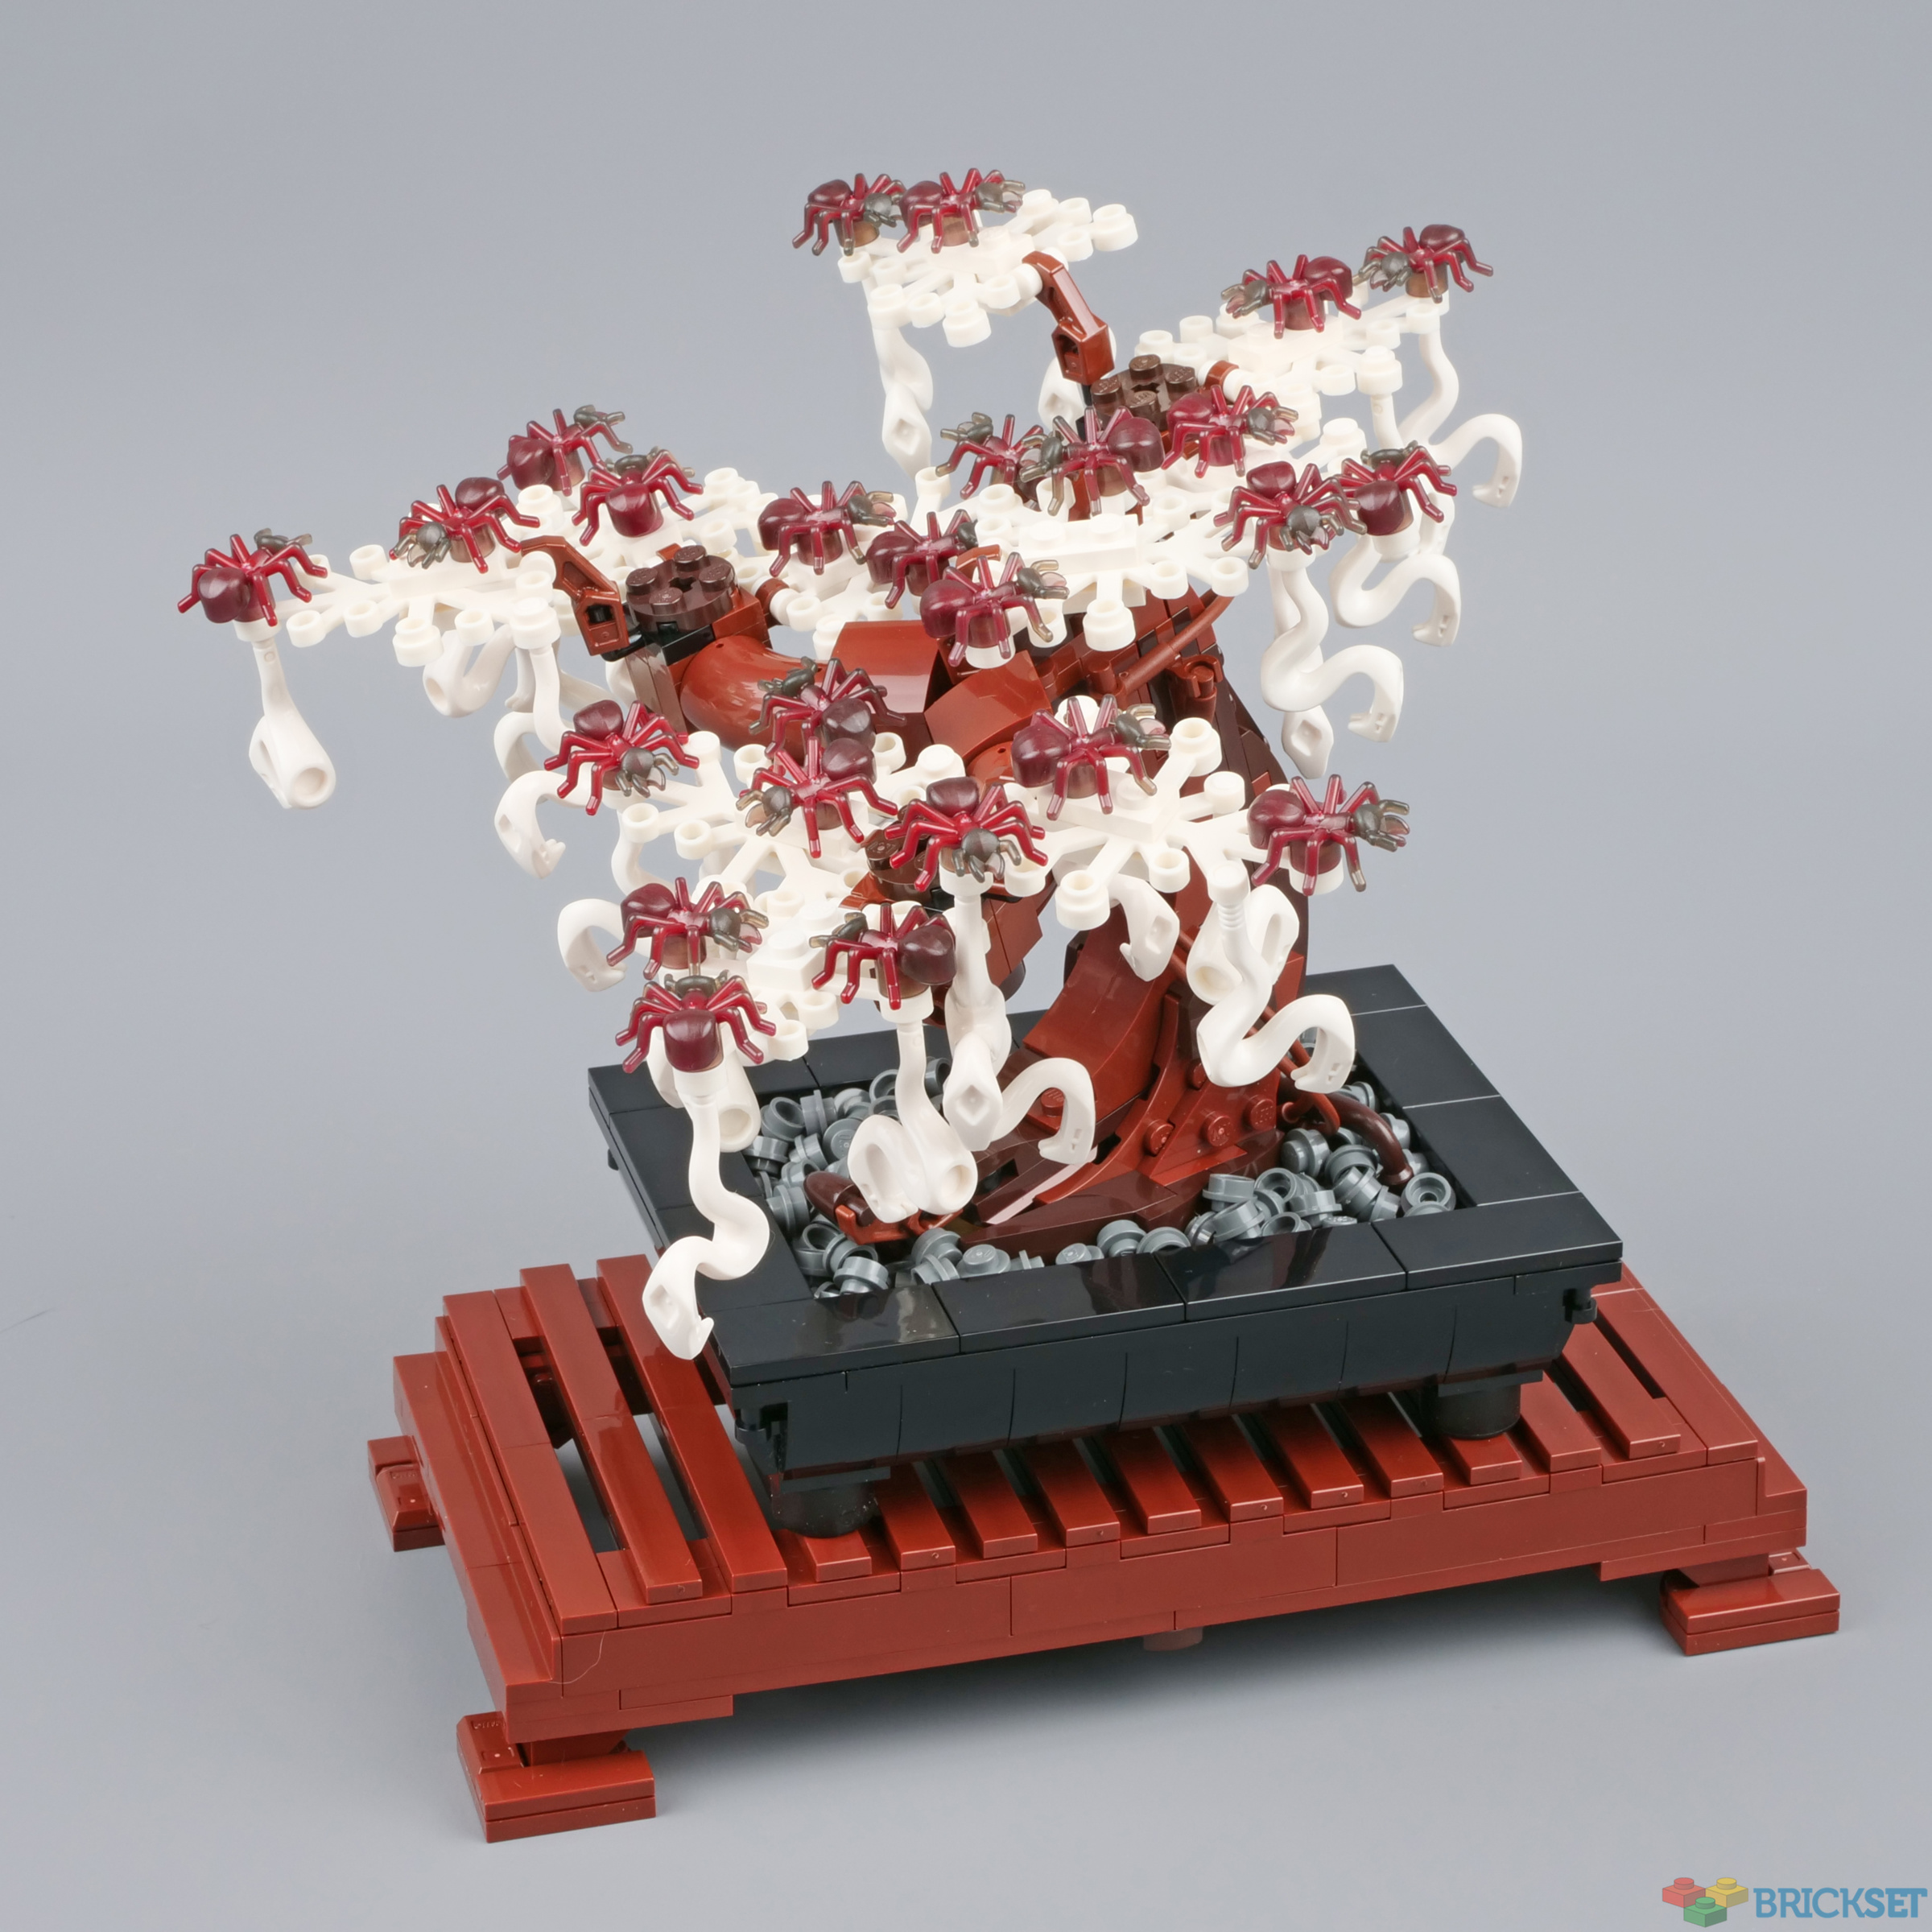 Modifying the bonsai tree | Brickset